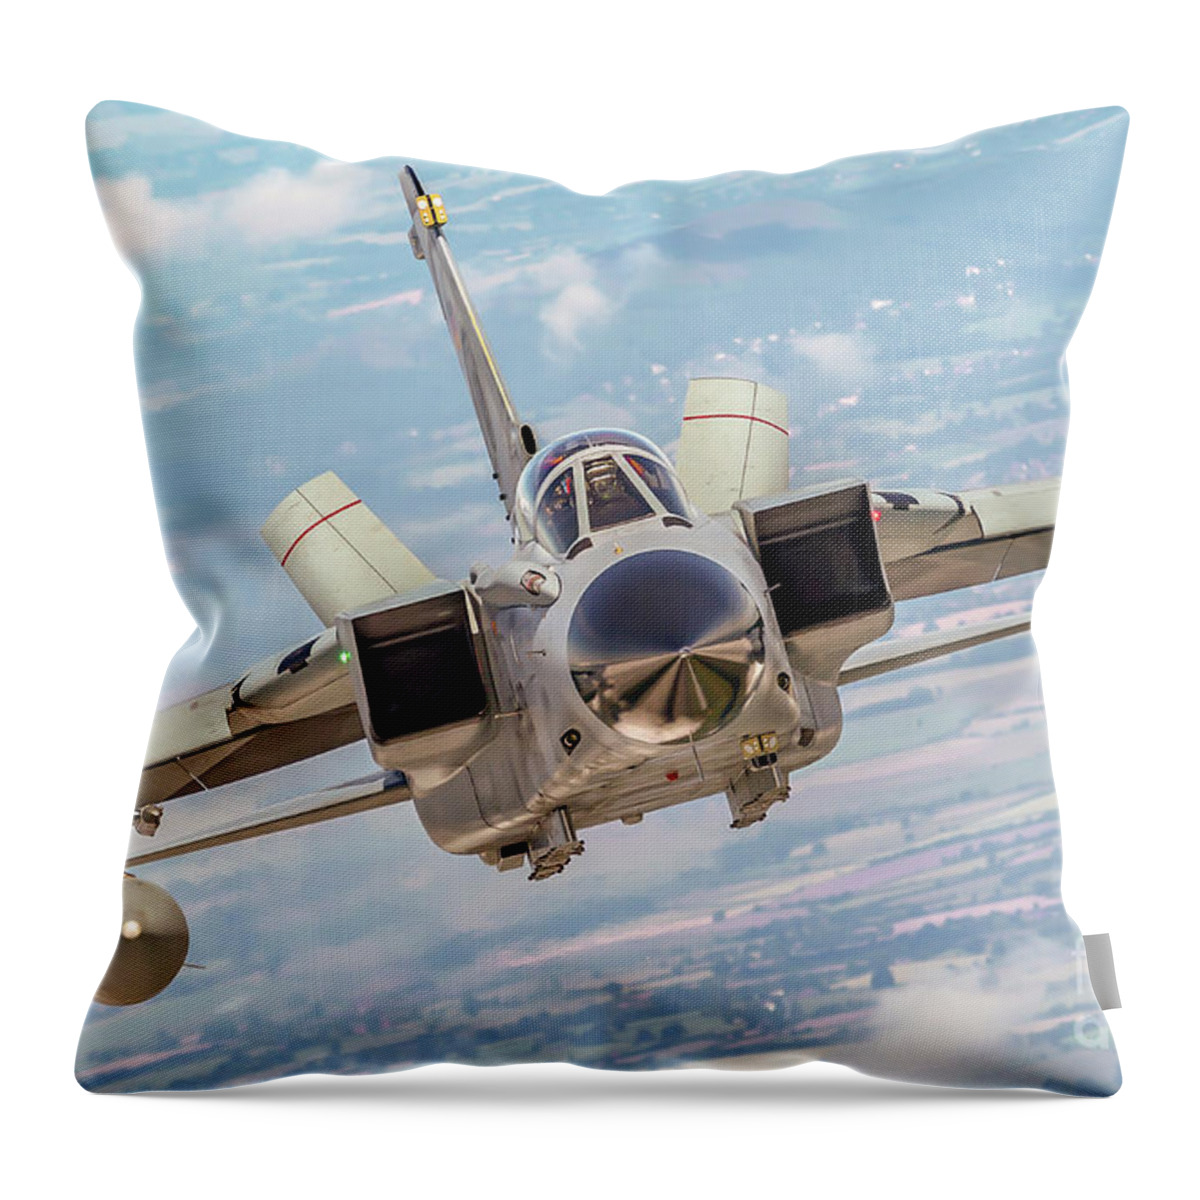 German Throw Pillow featuring the photograph German Air Force, Panavia Tornado b6 by Nir Ben-Yosef